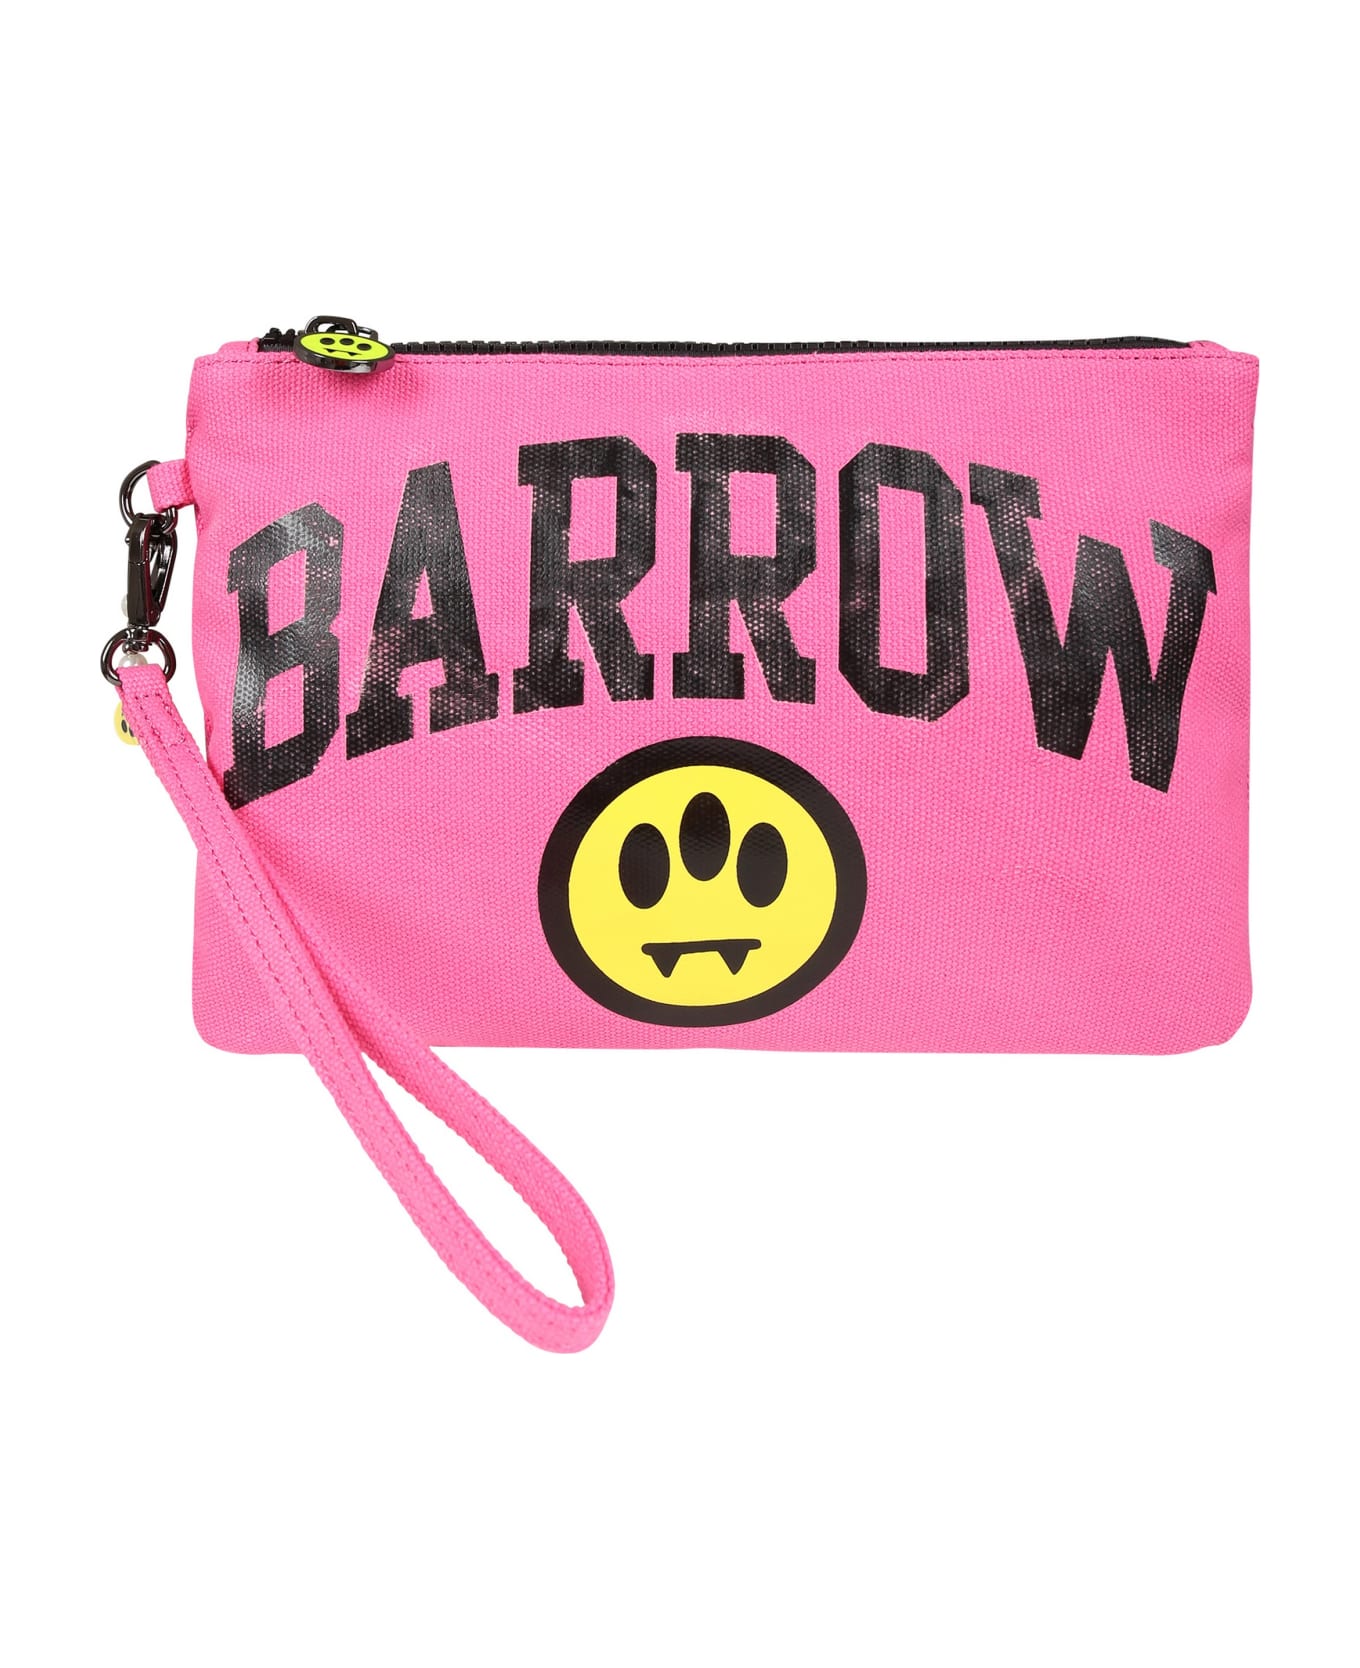 Barrow Fuchsia Clutch Bag For Girl With Logo And Smiley - Fuchsia